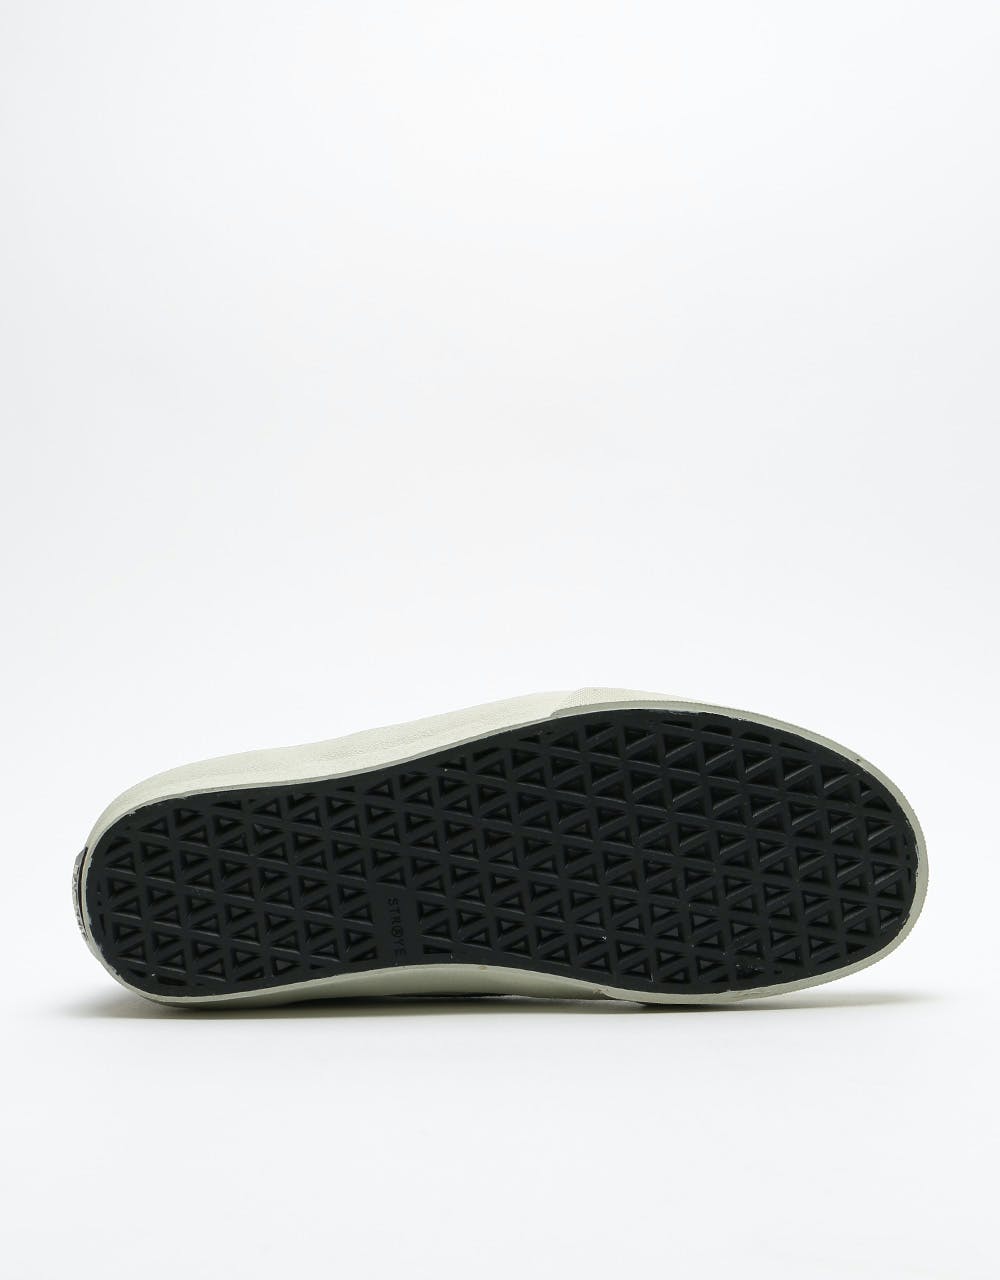 Straye Fairfax Skate Shoes - Cheetah Charcoal